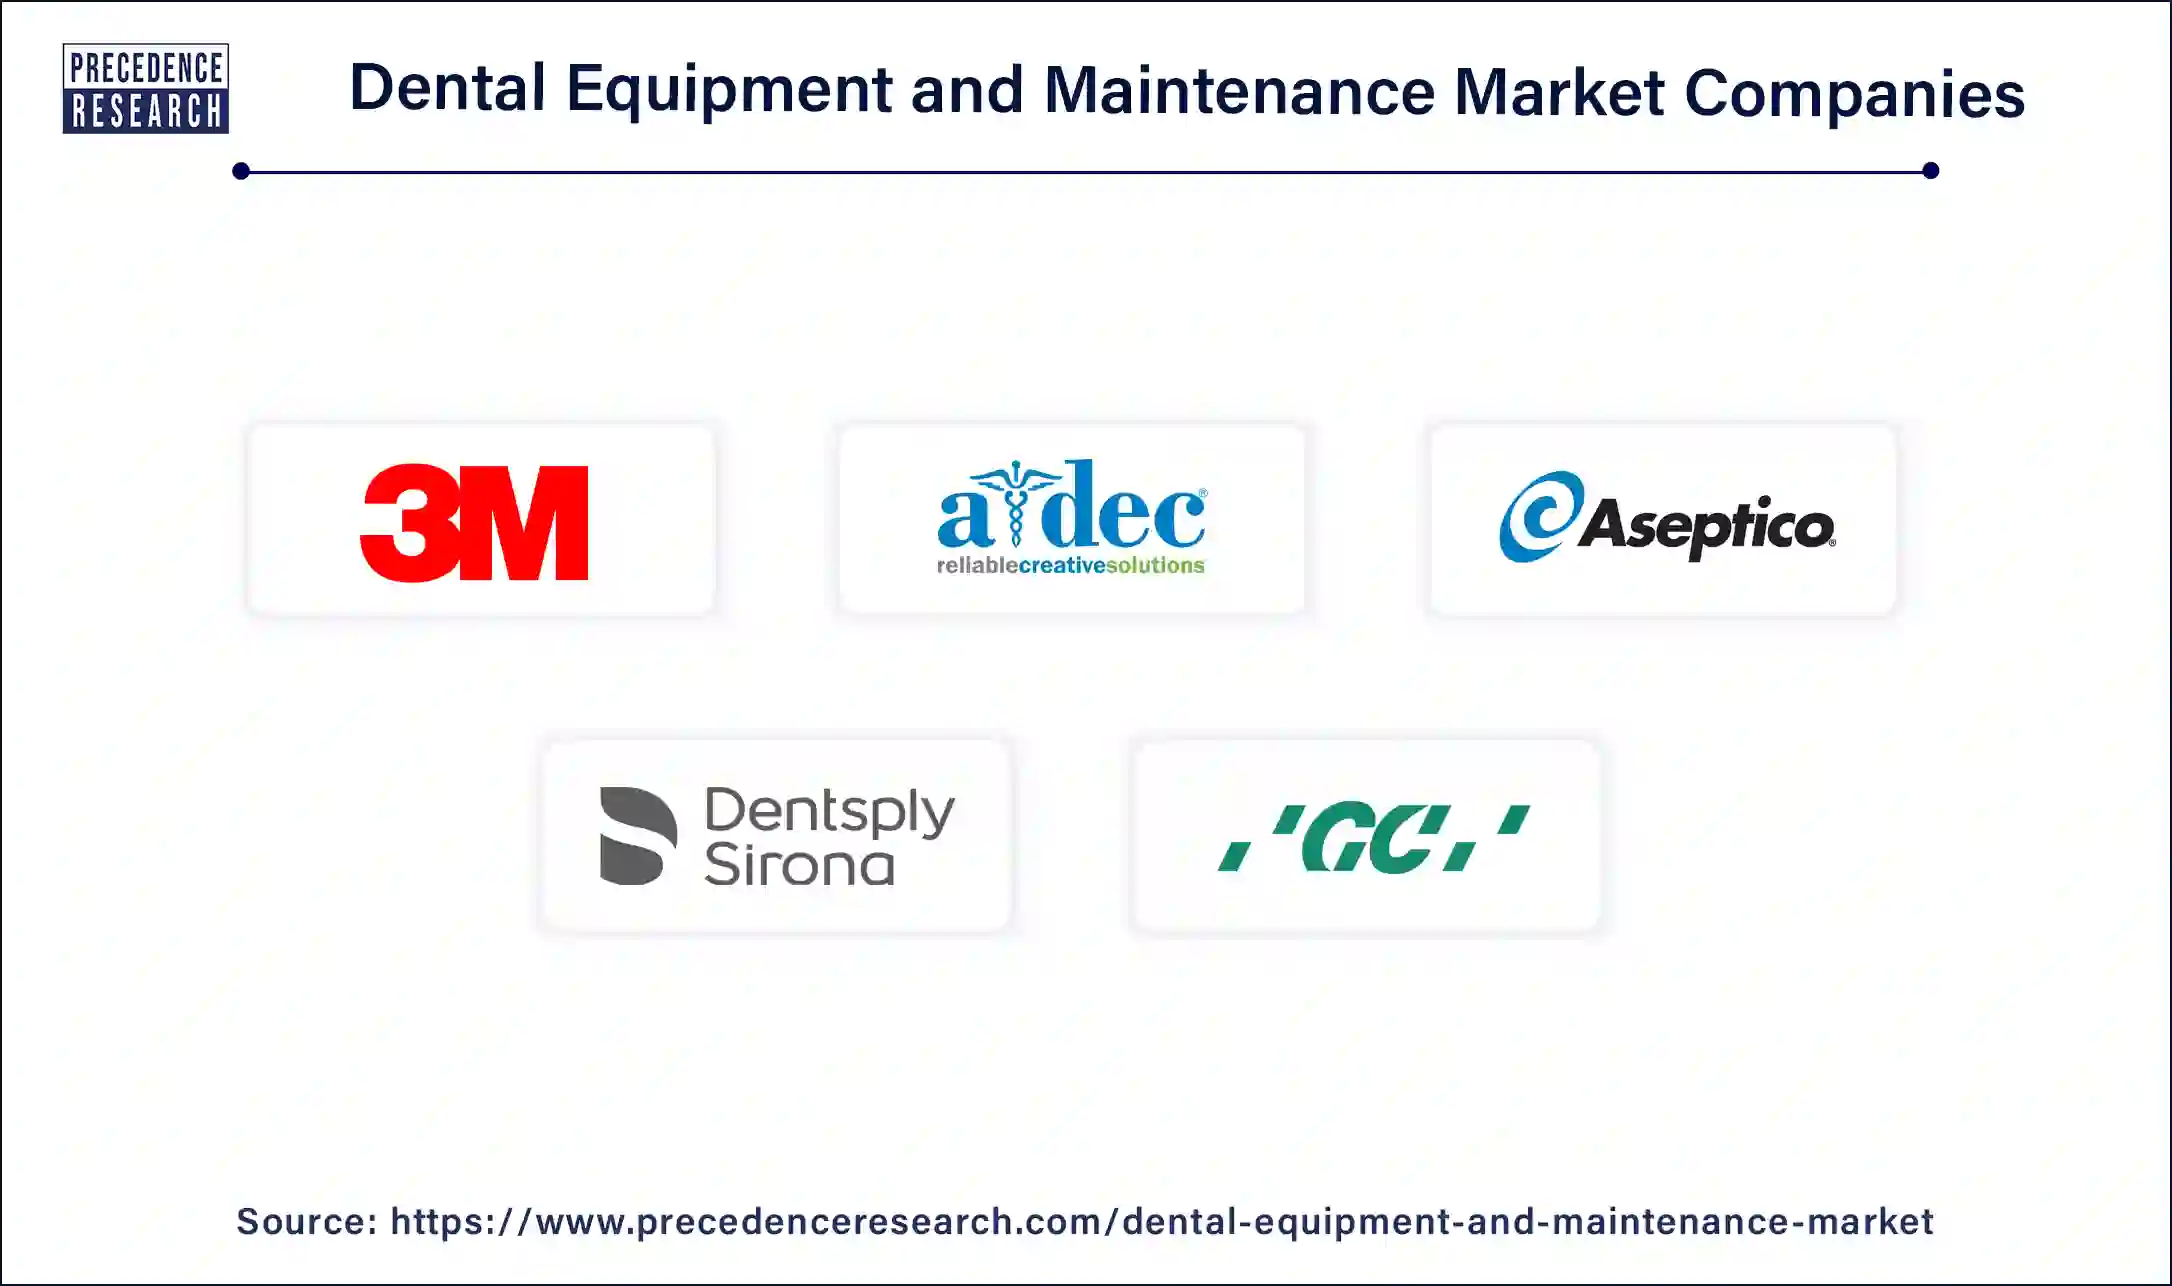 Dental Equipment and Maintenance Companies